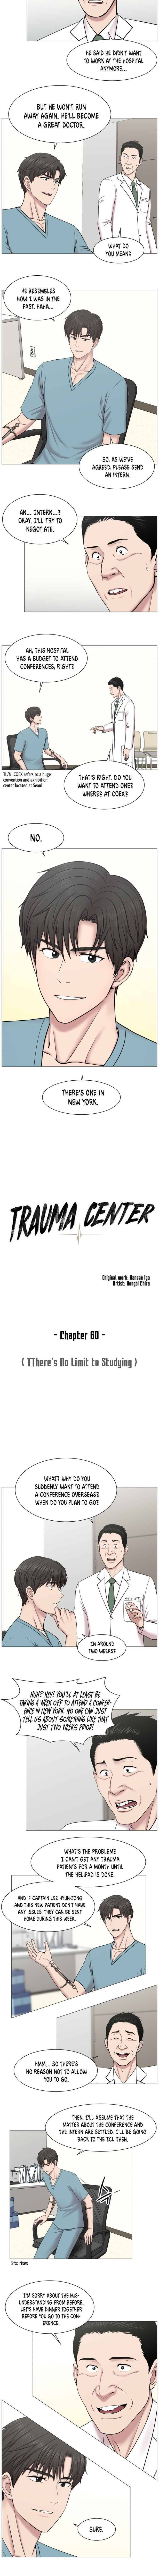 Trauma Center Chapter 60 - Page 6